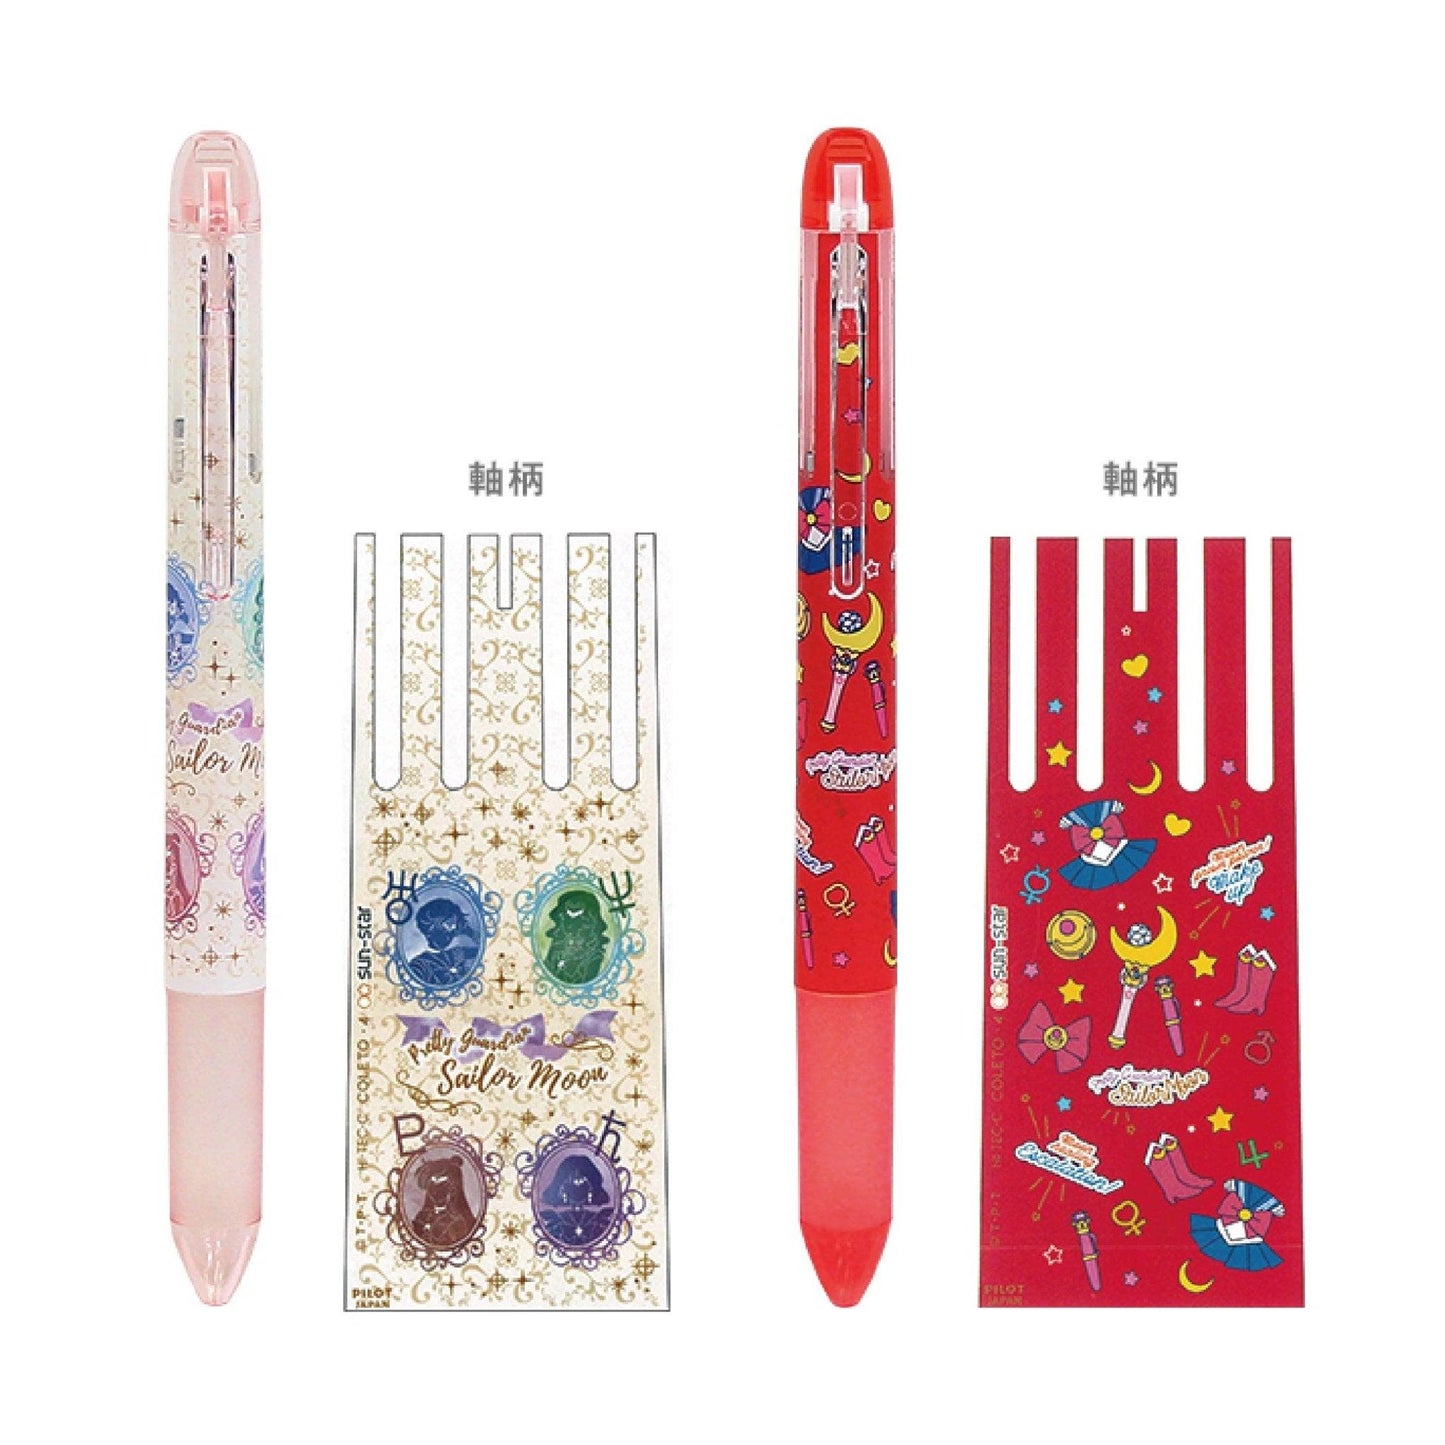 Sun-Star S46458 HI-TEC-C COLETO Sailor Moon Magical girl Rabbit Red Ivory 4 Color Pen Case - CHL-STORE 